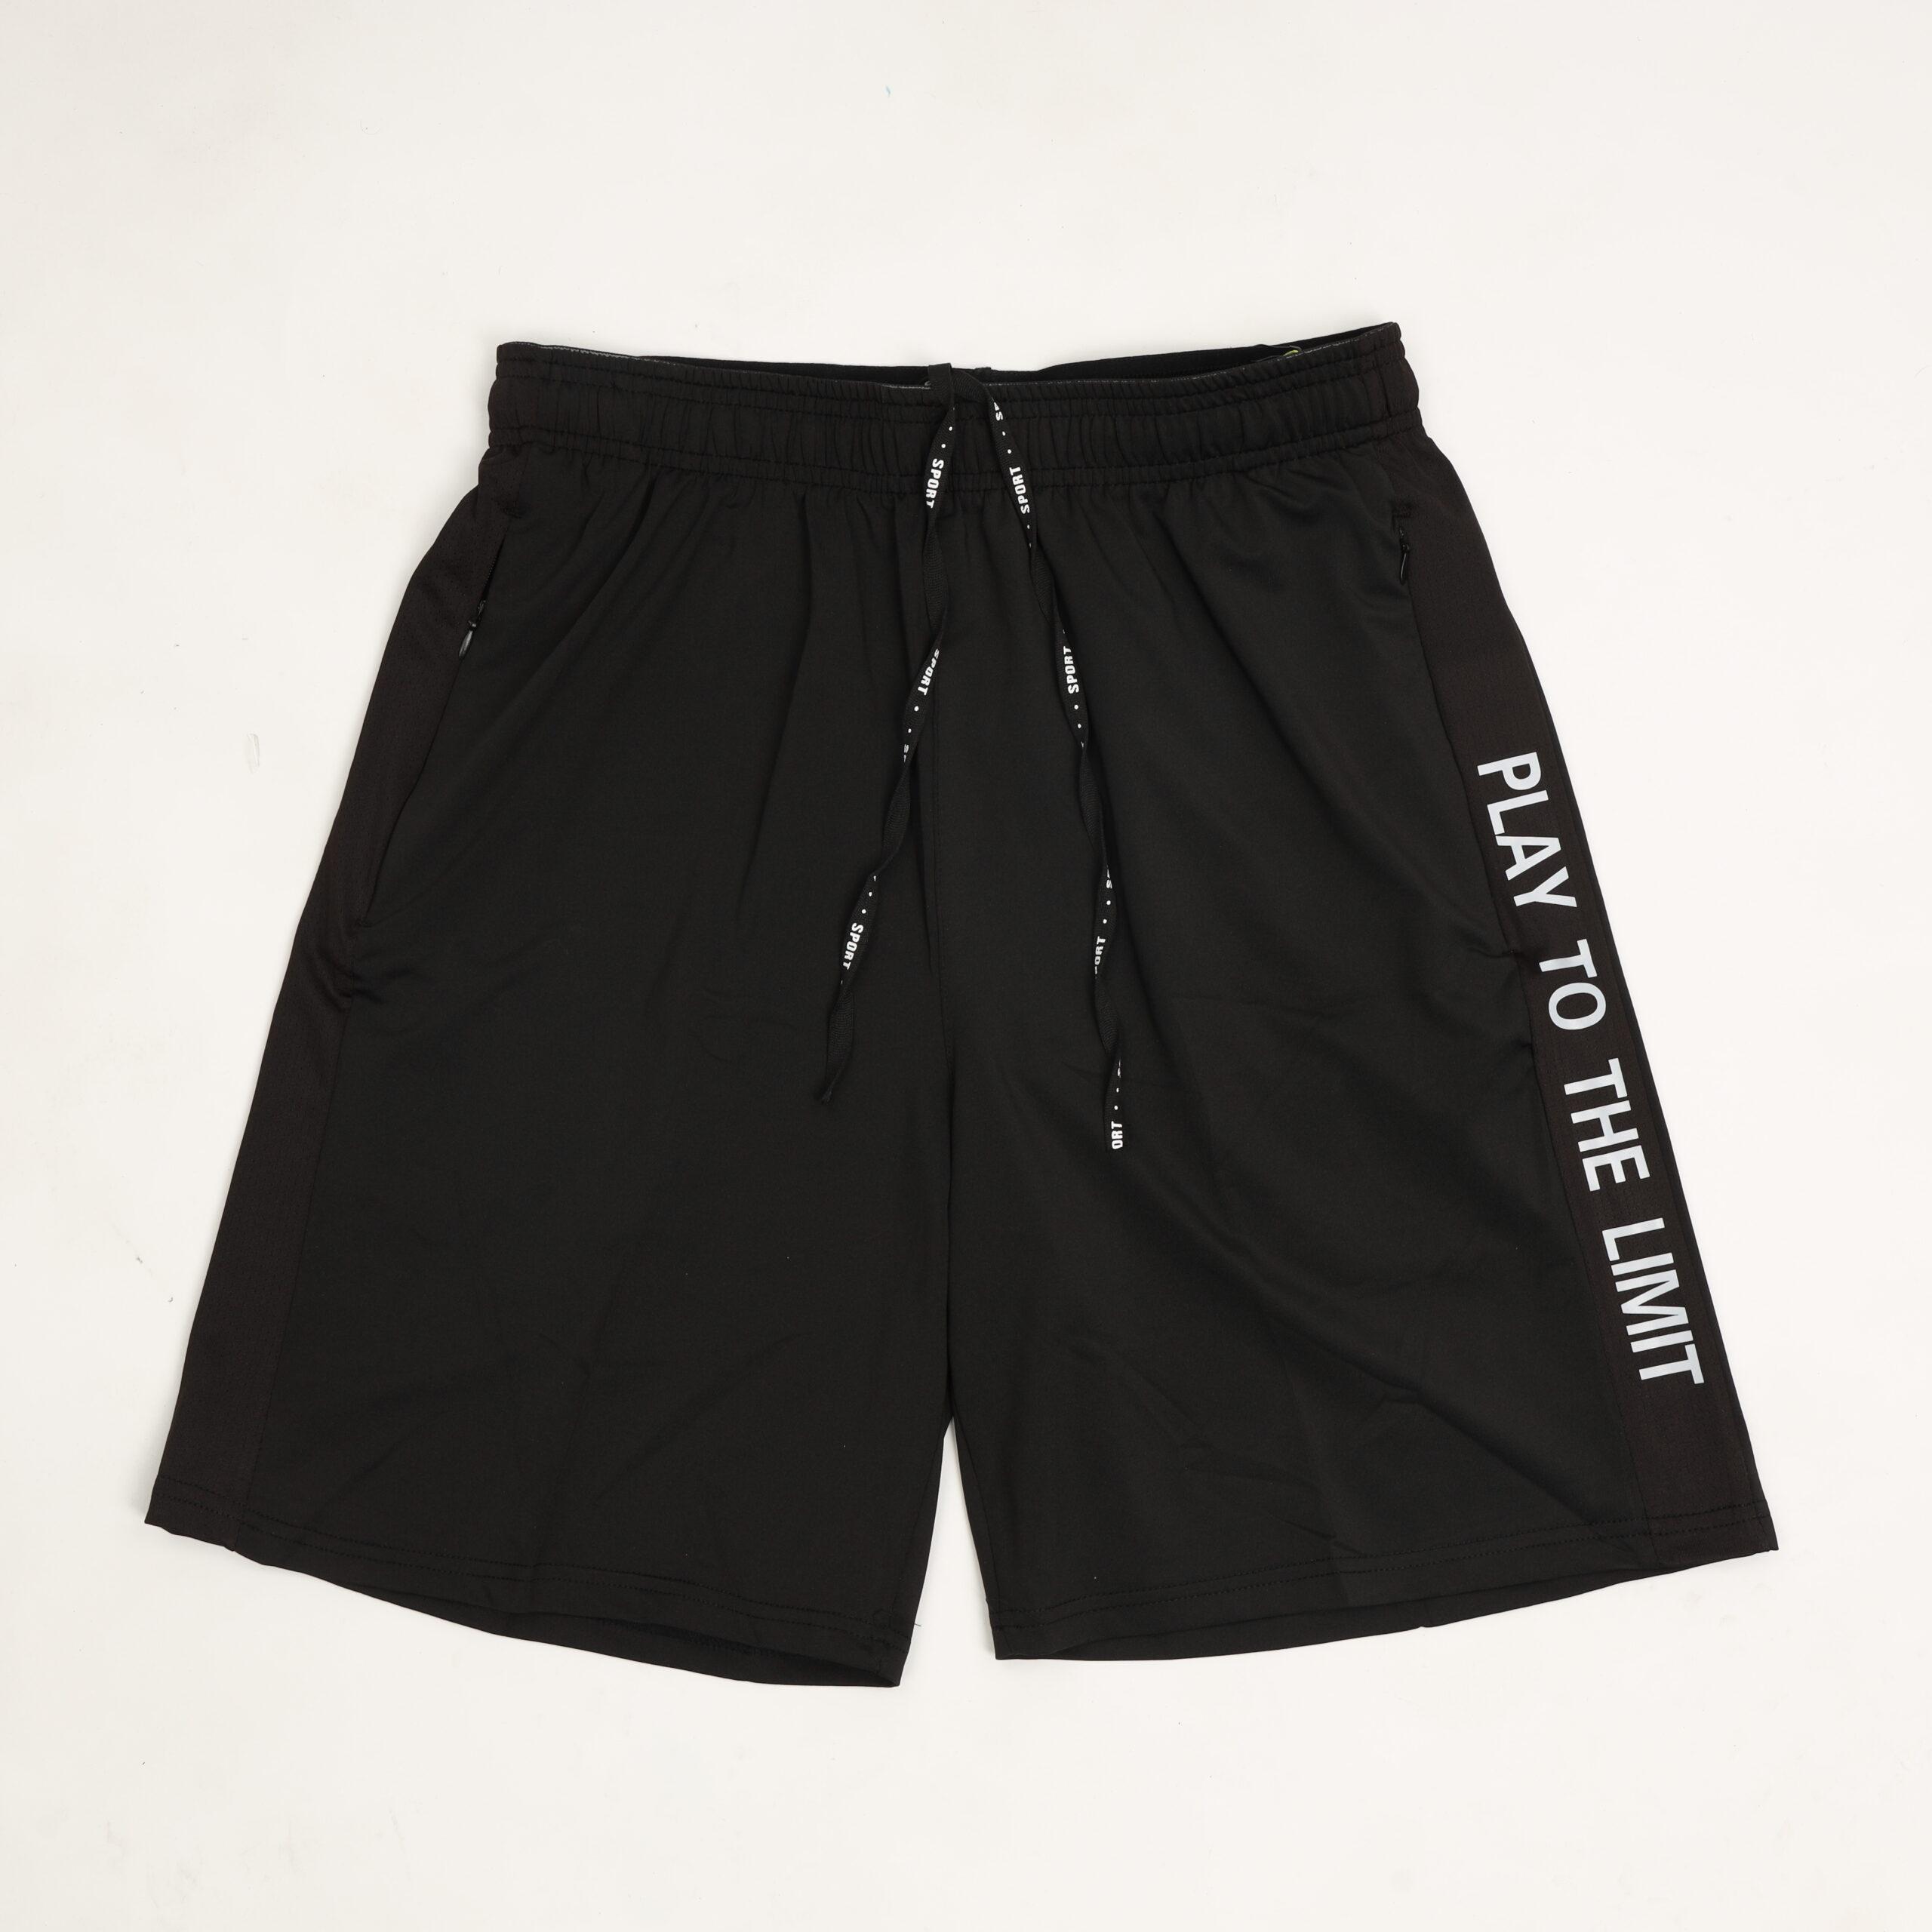 Ecka Men's Tennis Shorts-Black